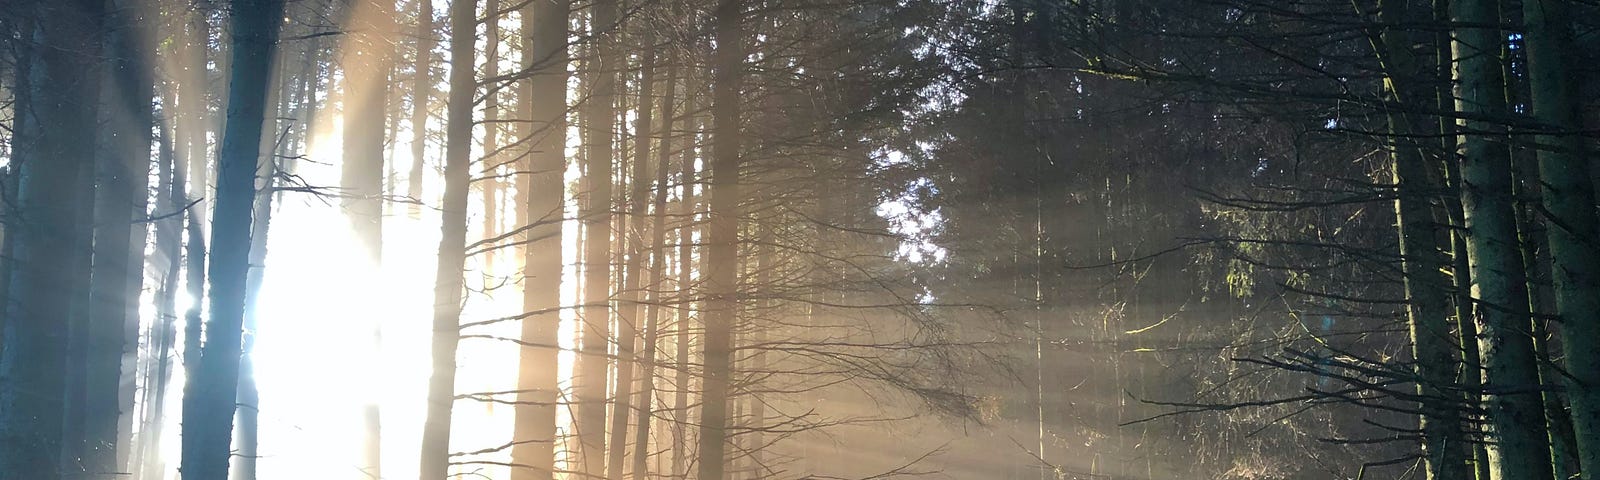 sunbeams piercing through misty wooded area